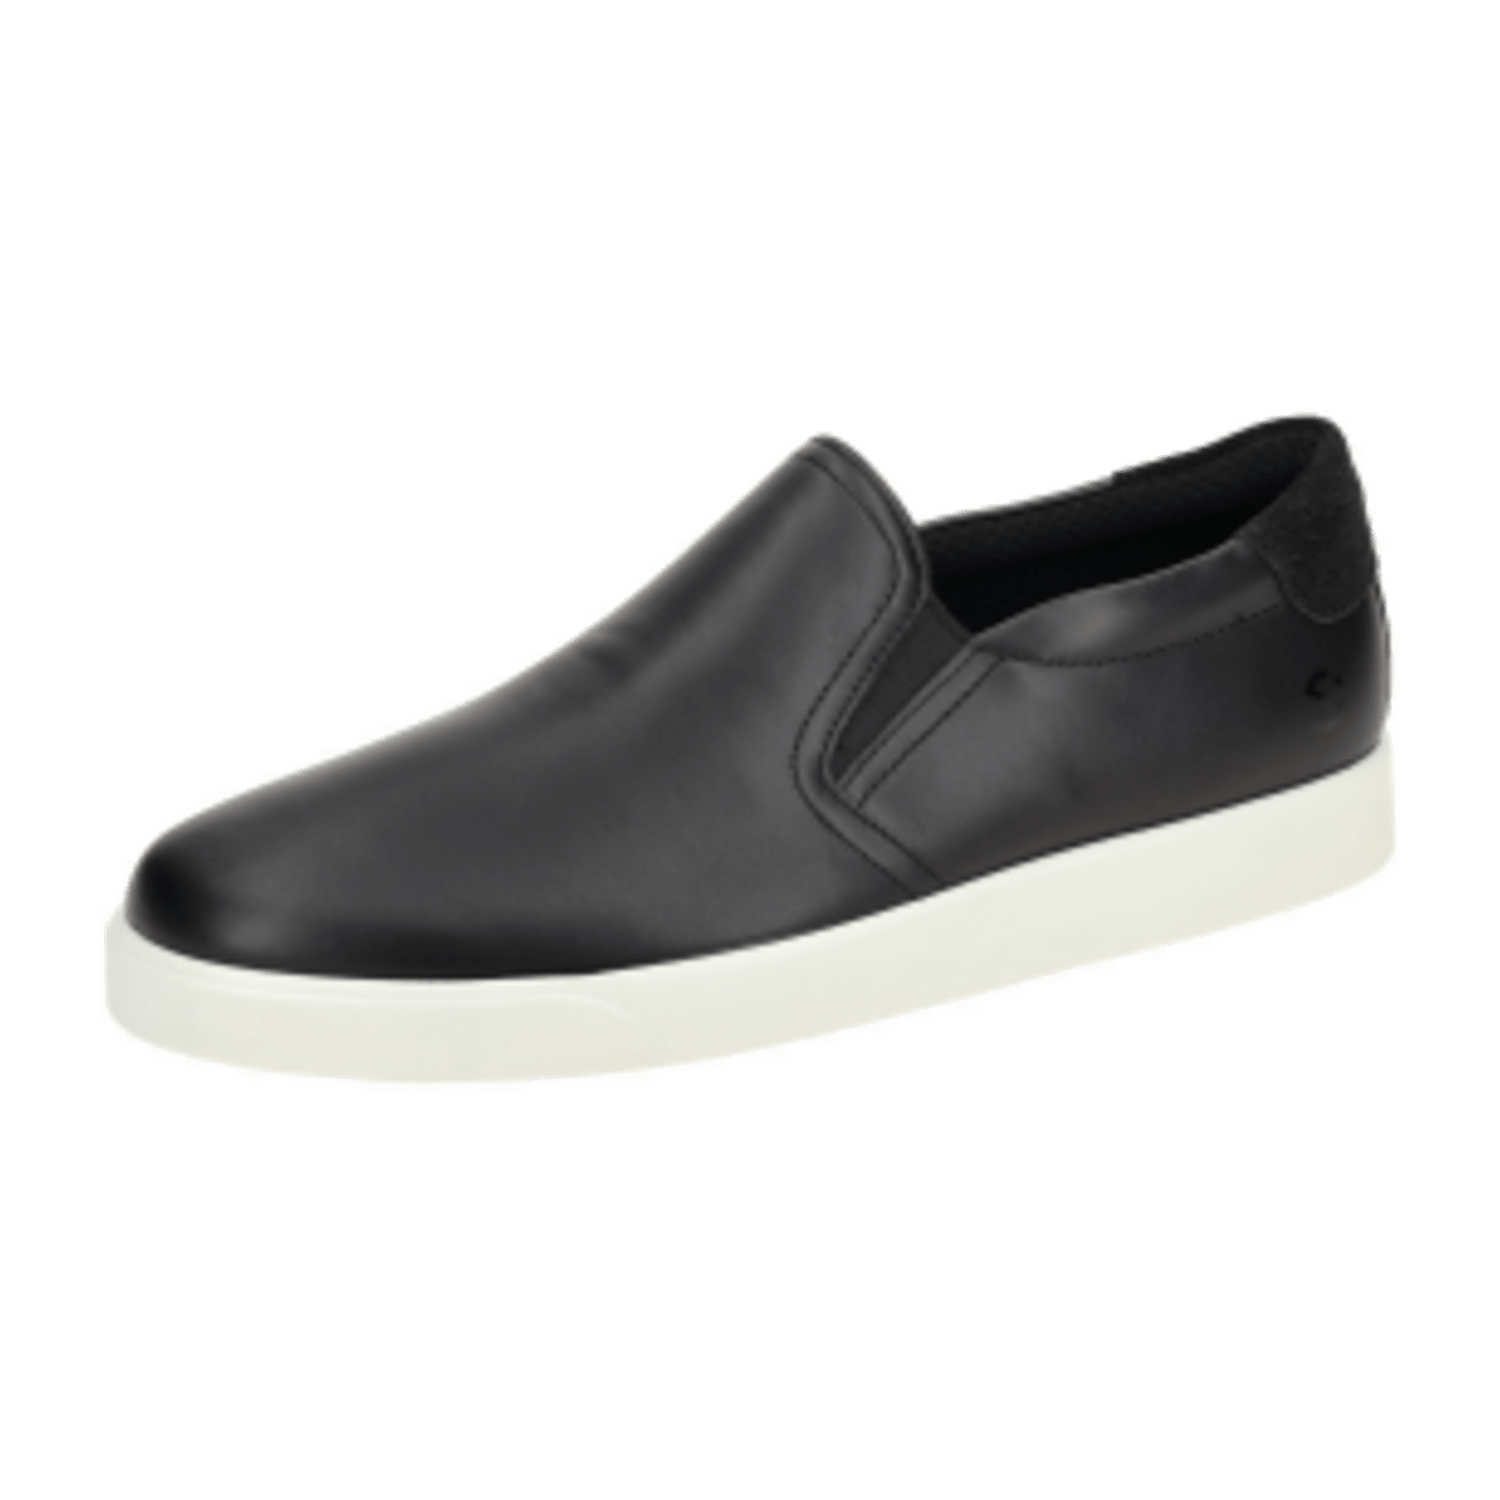 Ecco Street Lite Slipper Schuhe schwarz 521414